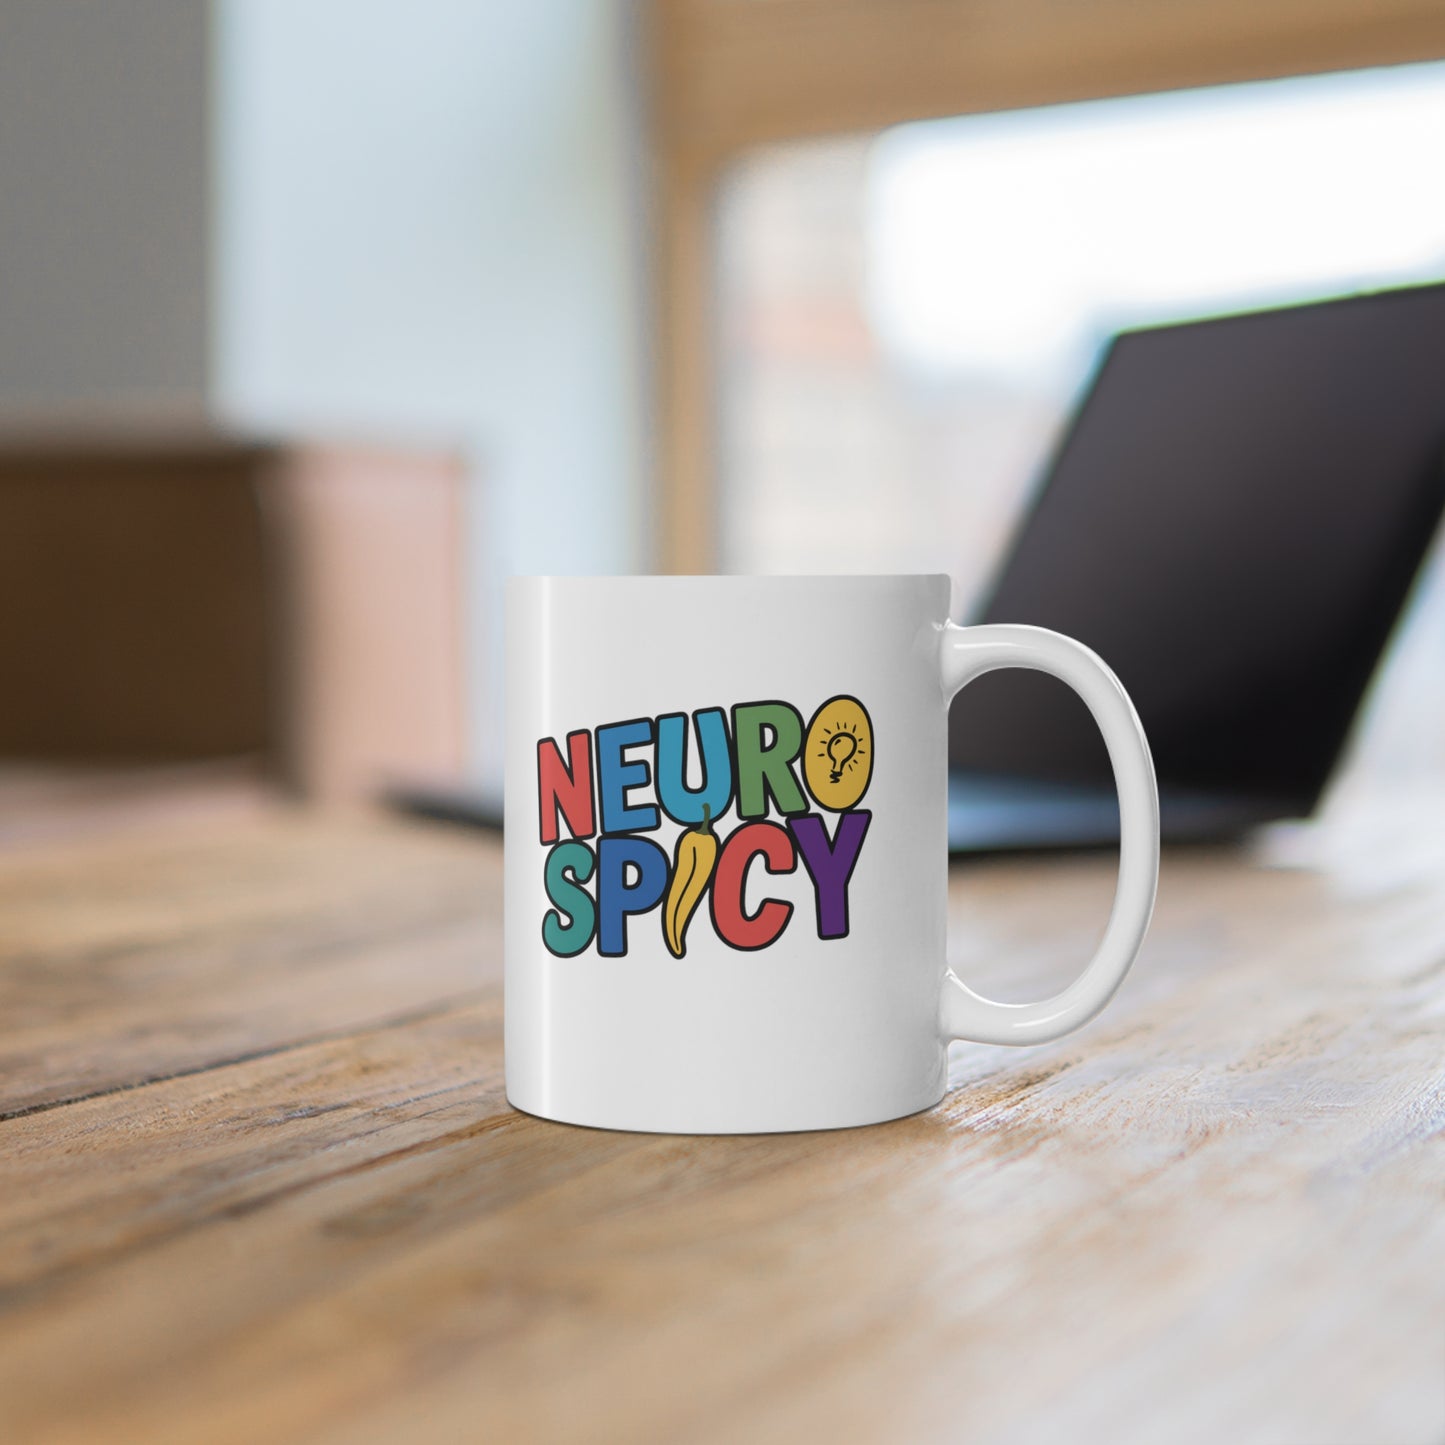 Neurospicy - Neurodiversity Awareness Mug: